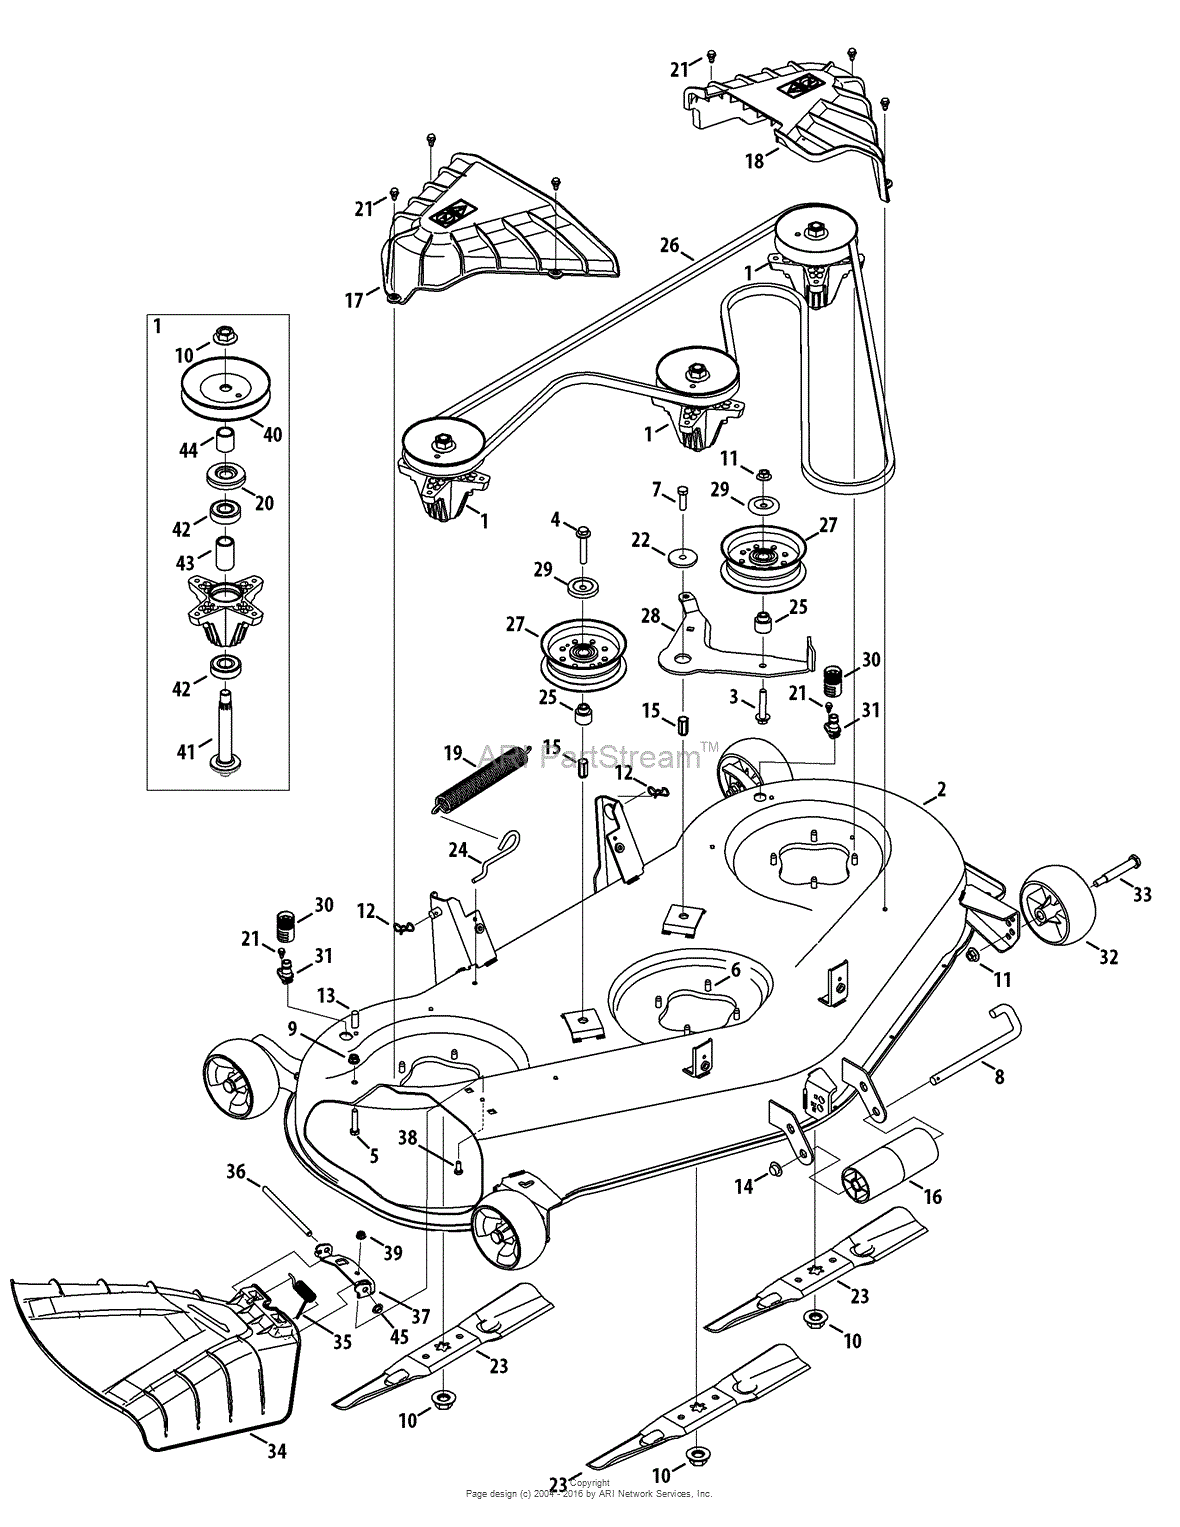 Parts Diagram For Mower Deck